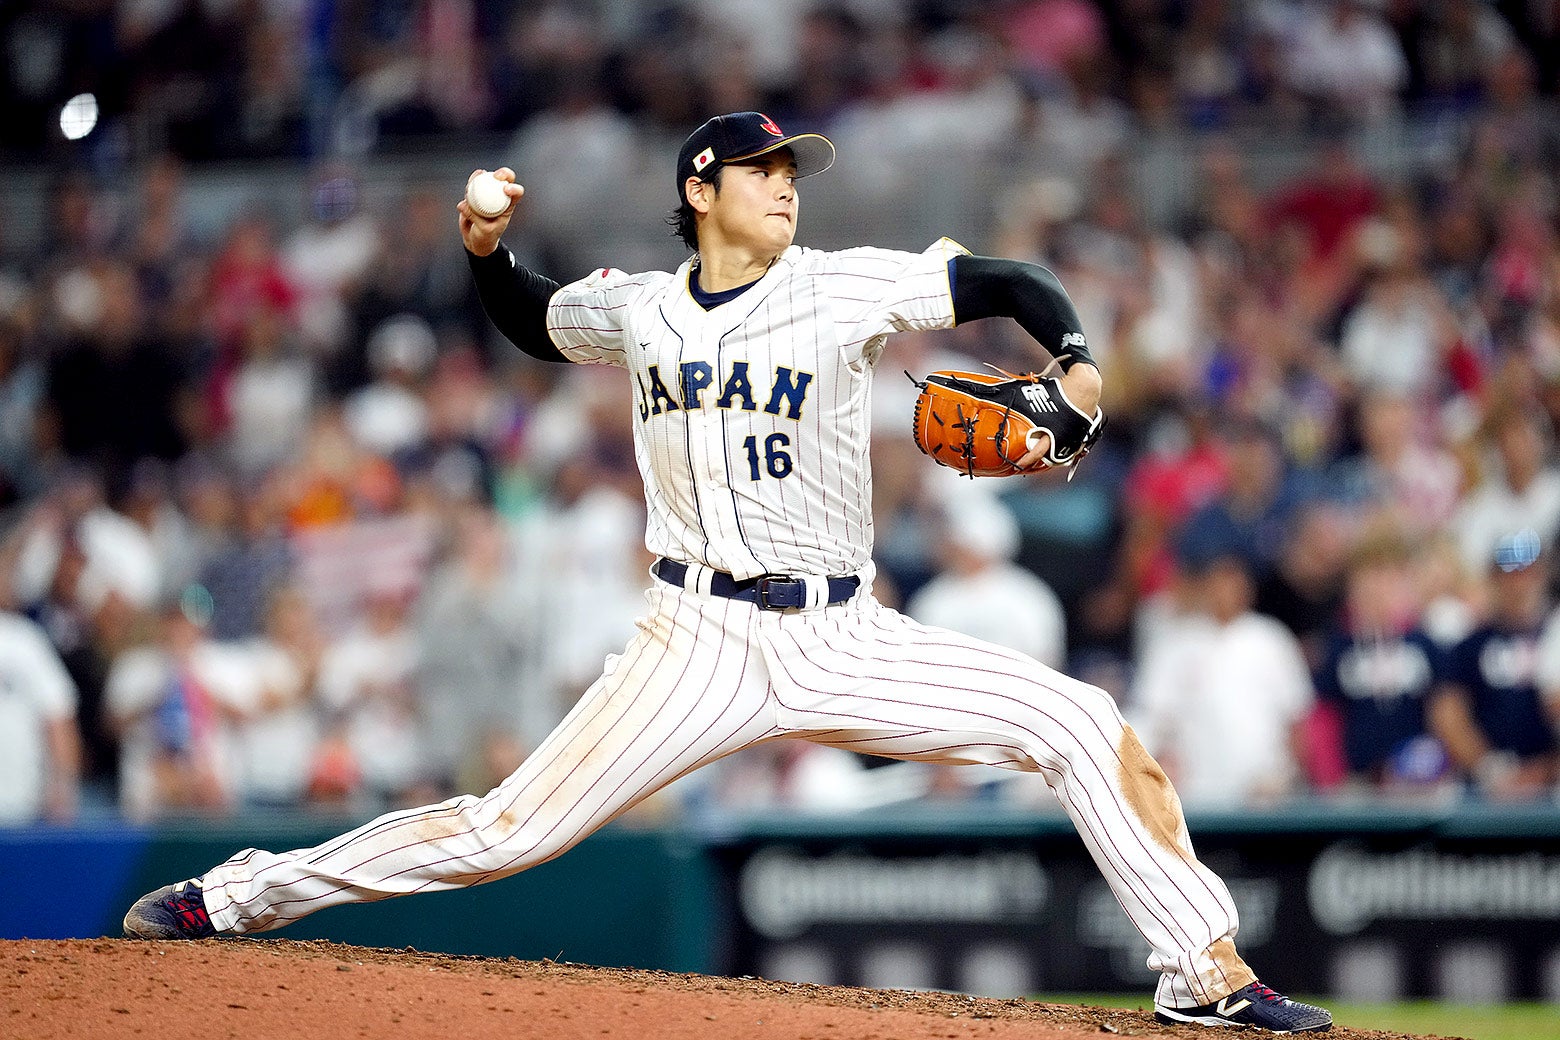 Shohei Ohtani throwing a pitch.